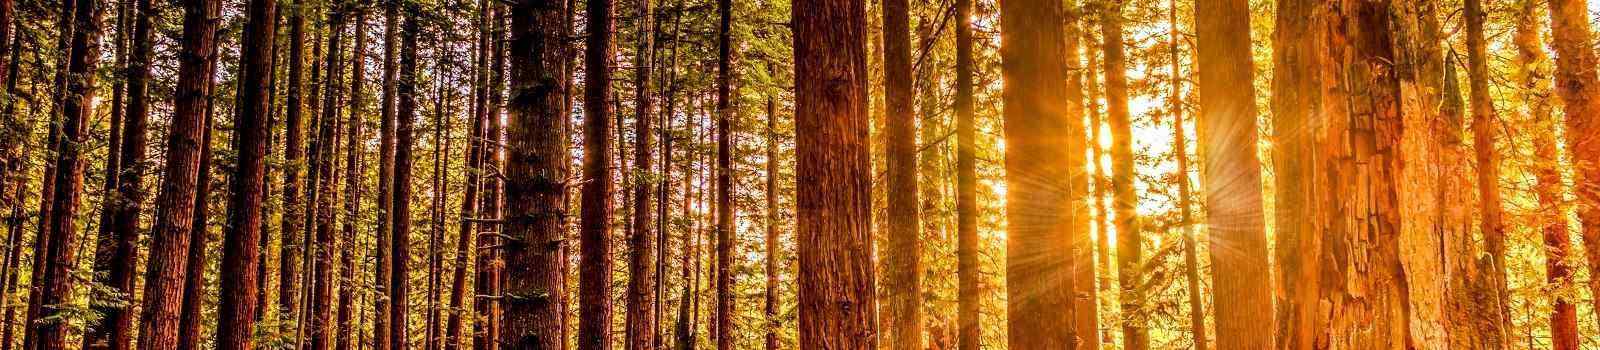 CALIFORNIA-DREAMING -Redwood Forest shutterstock 273541913